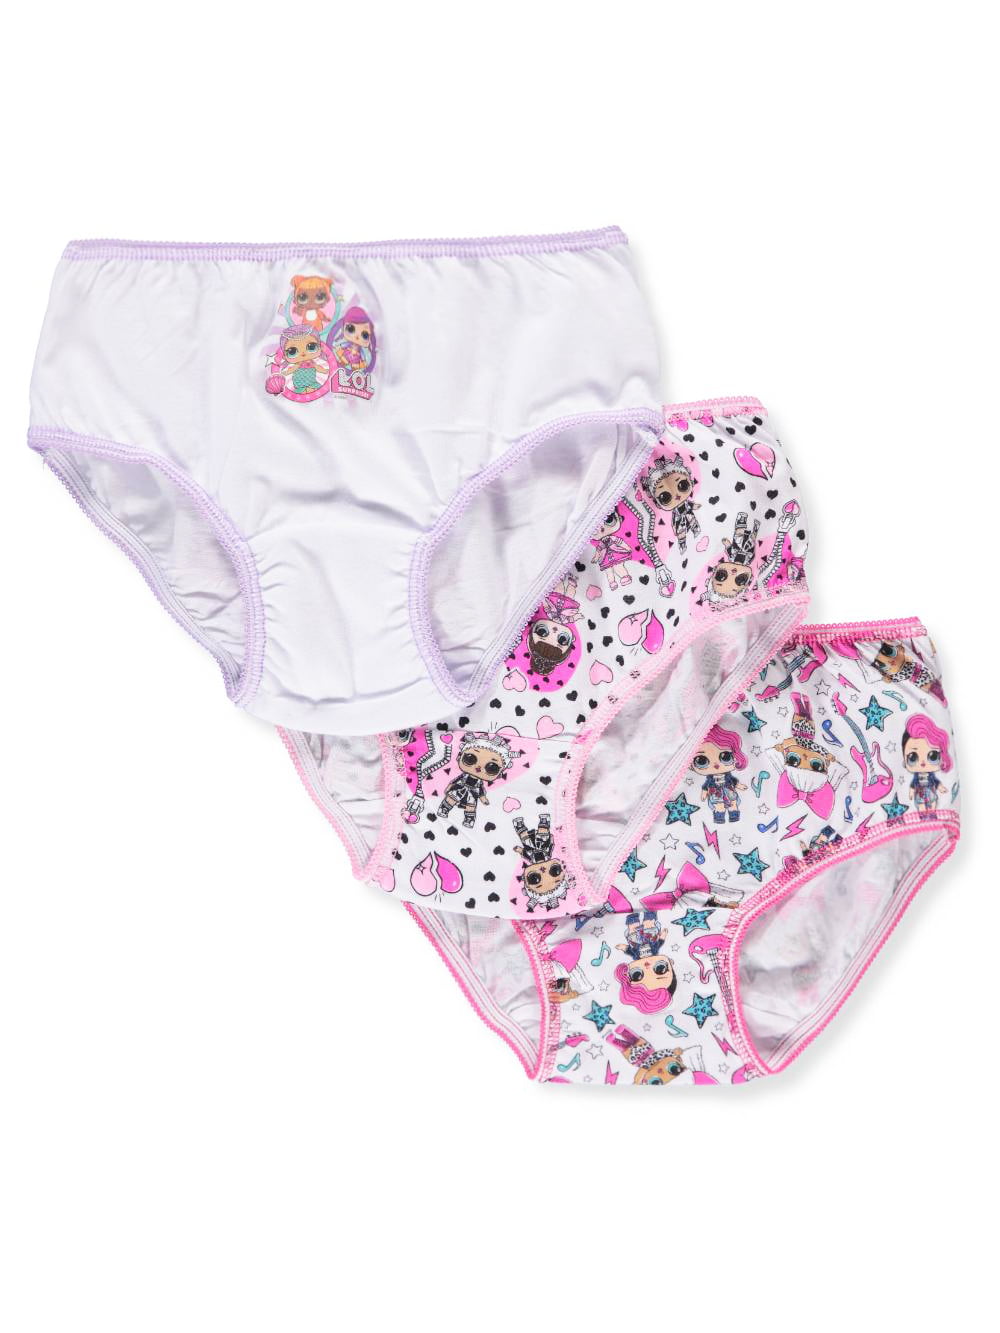  L.O.L. Surprise! girls L.o.l. Surprise! Girls' Panties  Multipack Bikini Style Underwear, Lol 12pk in Box, 4 US: Clothing, Shoes &  Jewelry